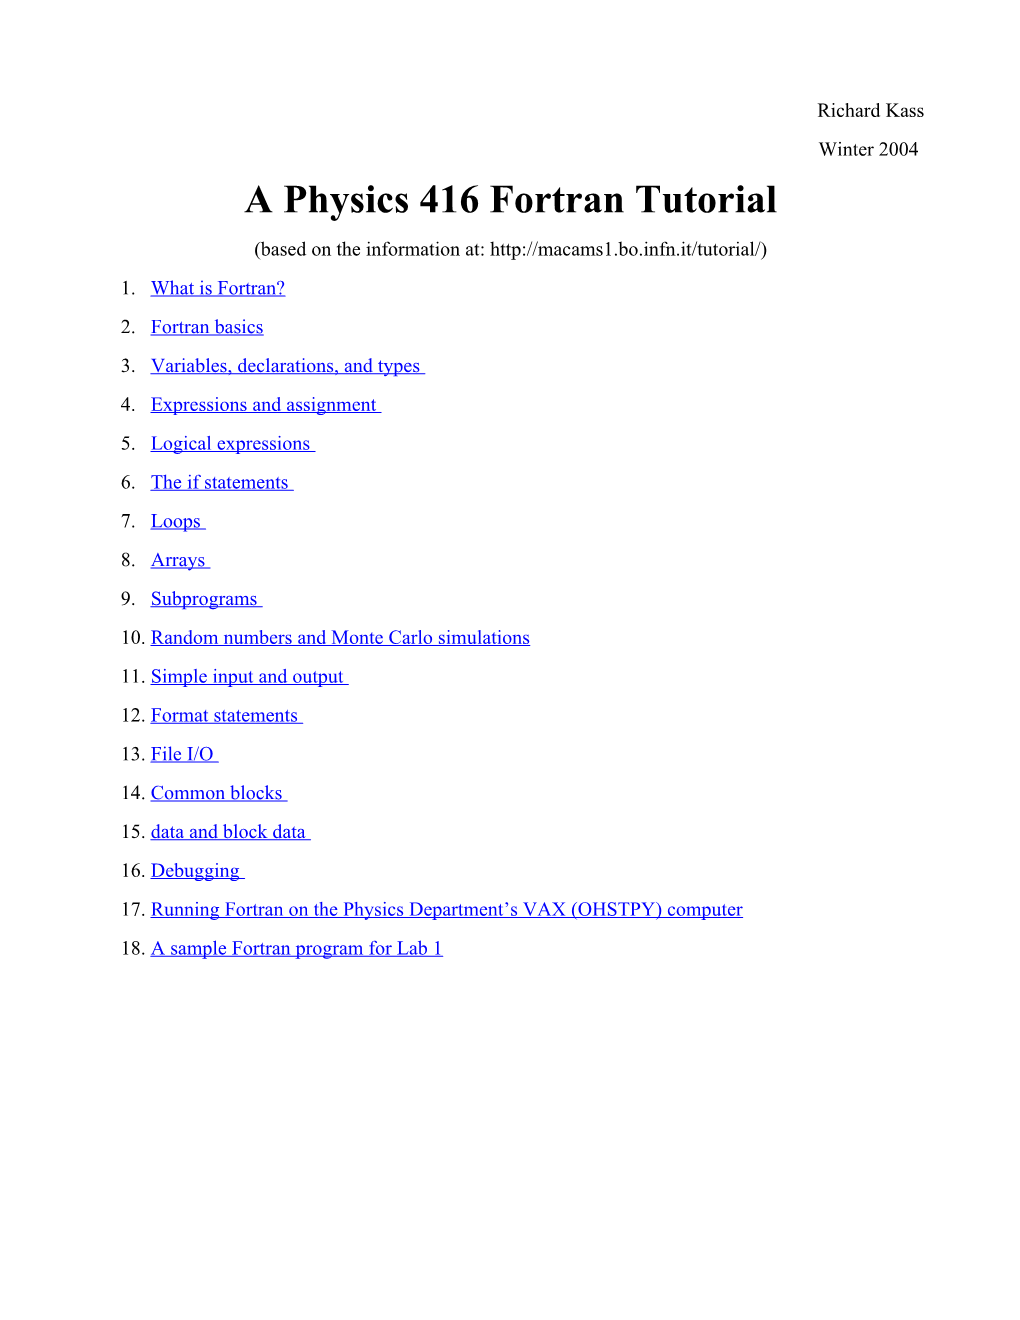 A Physics 416 Fortran Tutorial